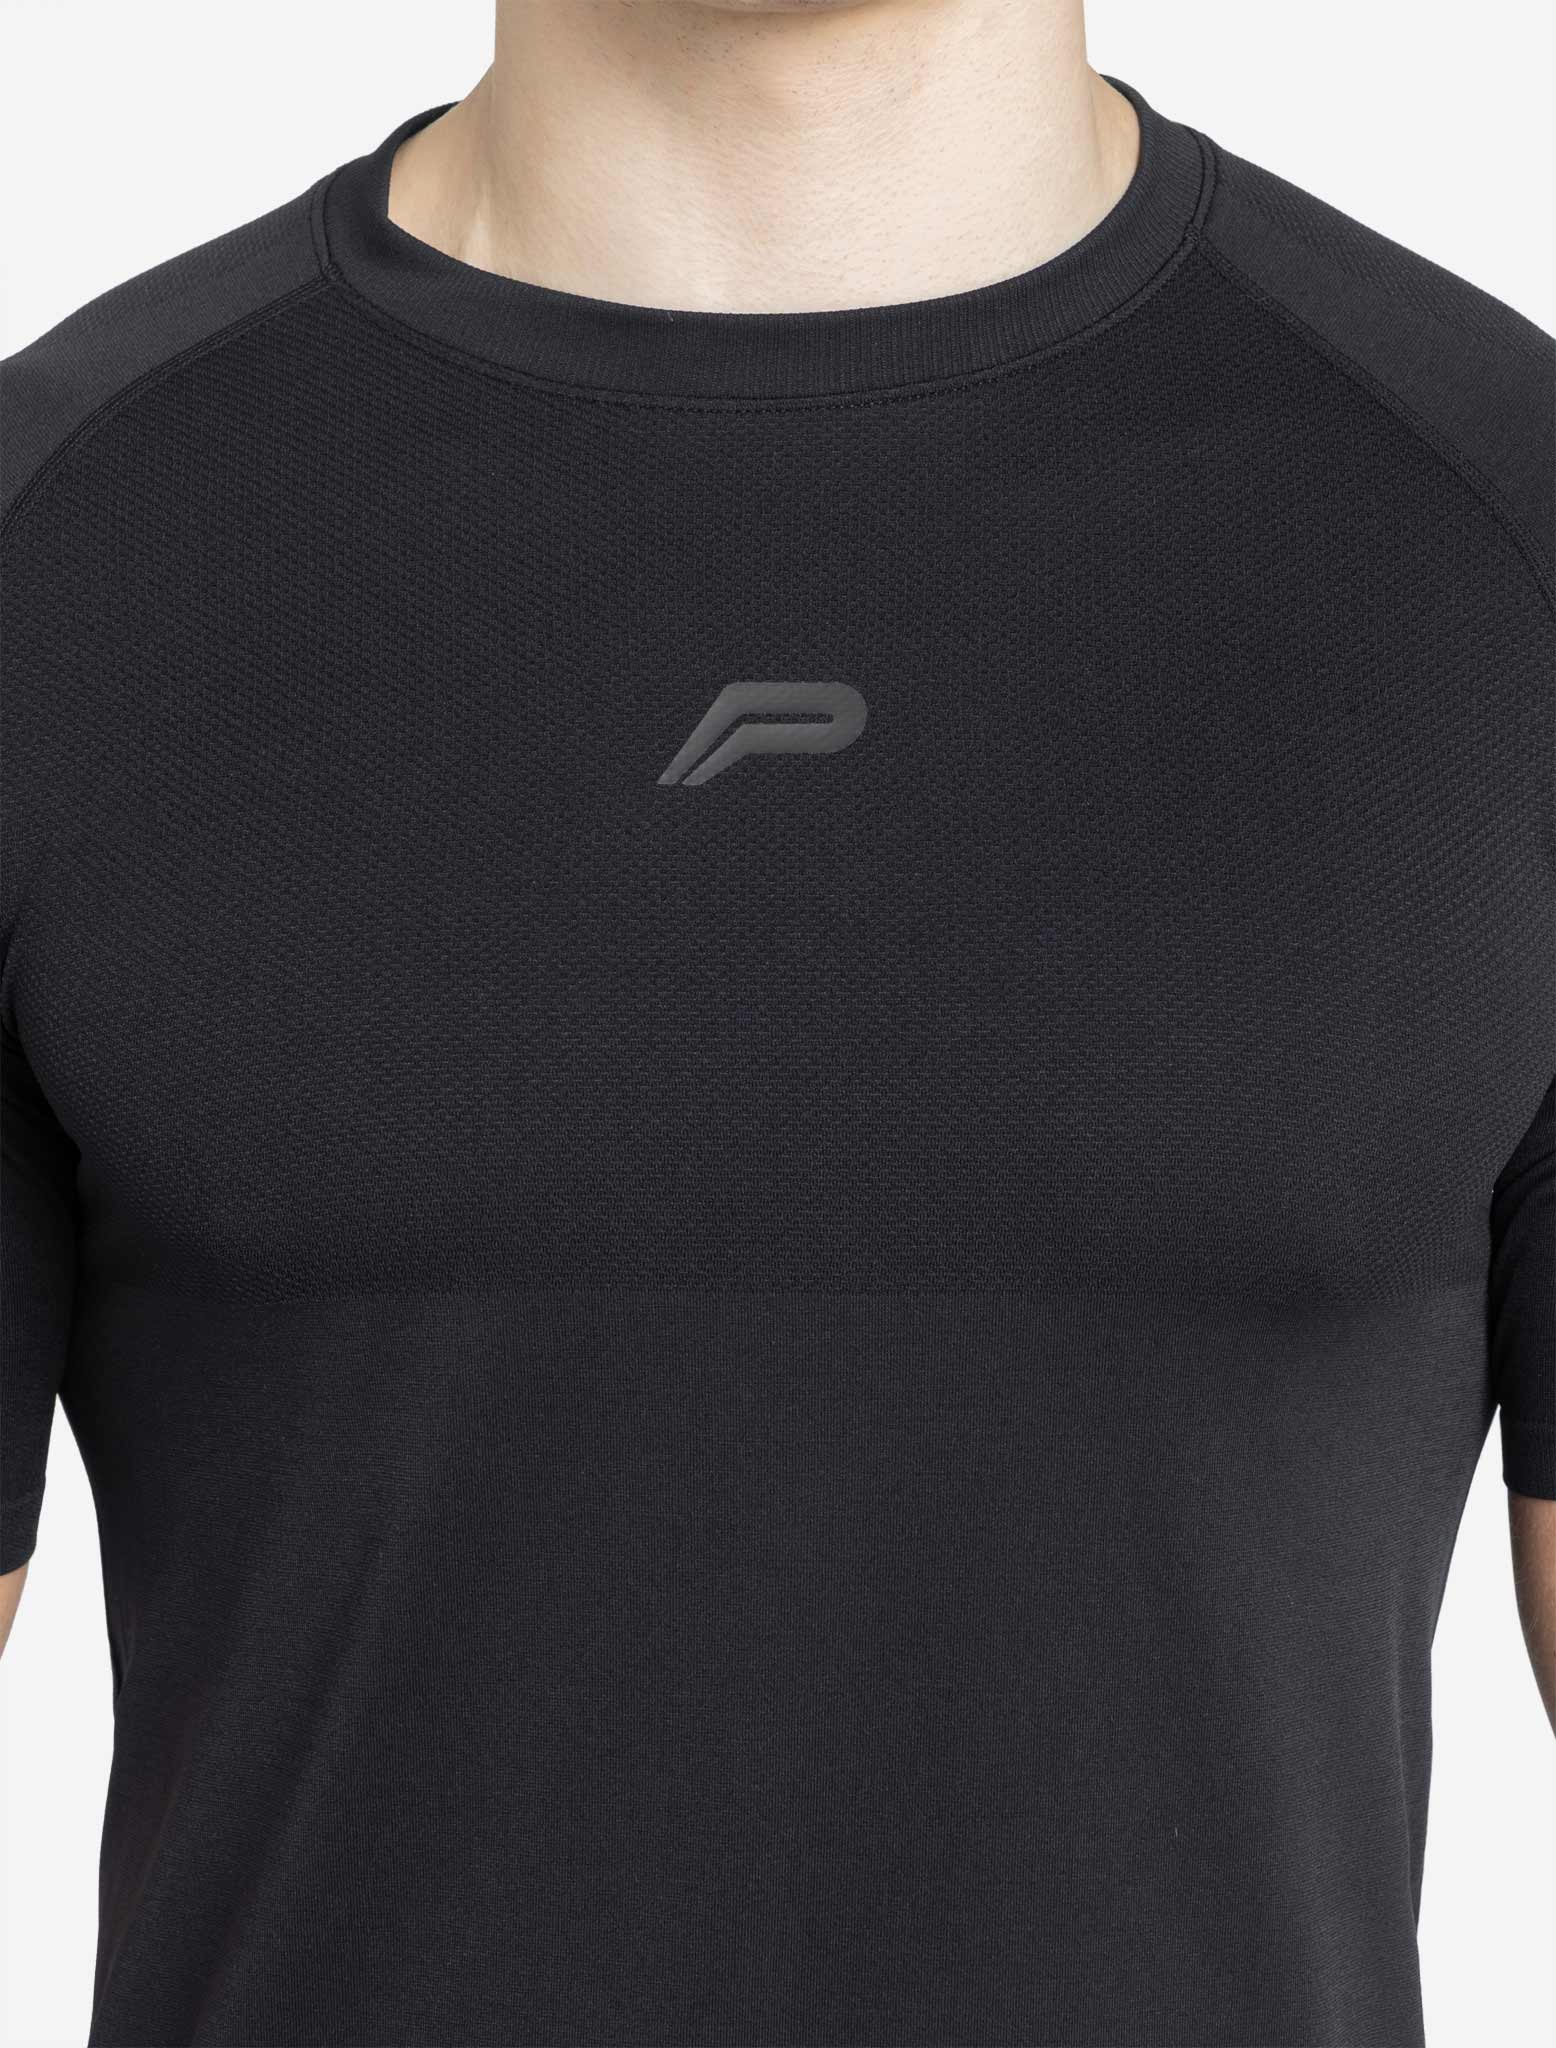 Seamless T-shirt / Black Pursue Fitness 2